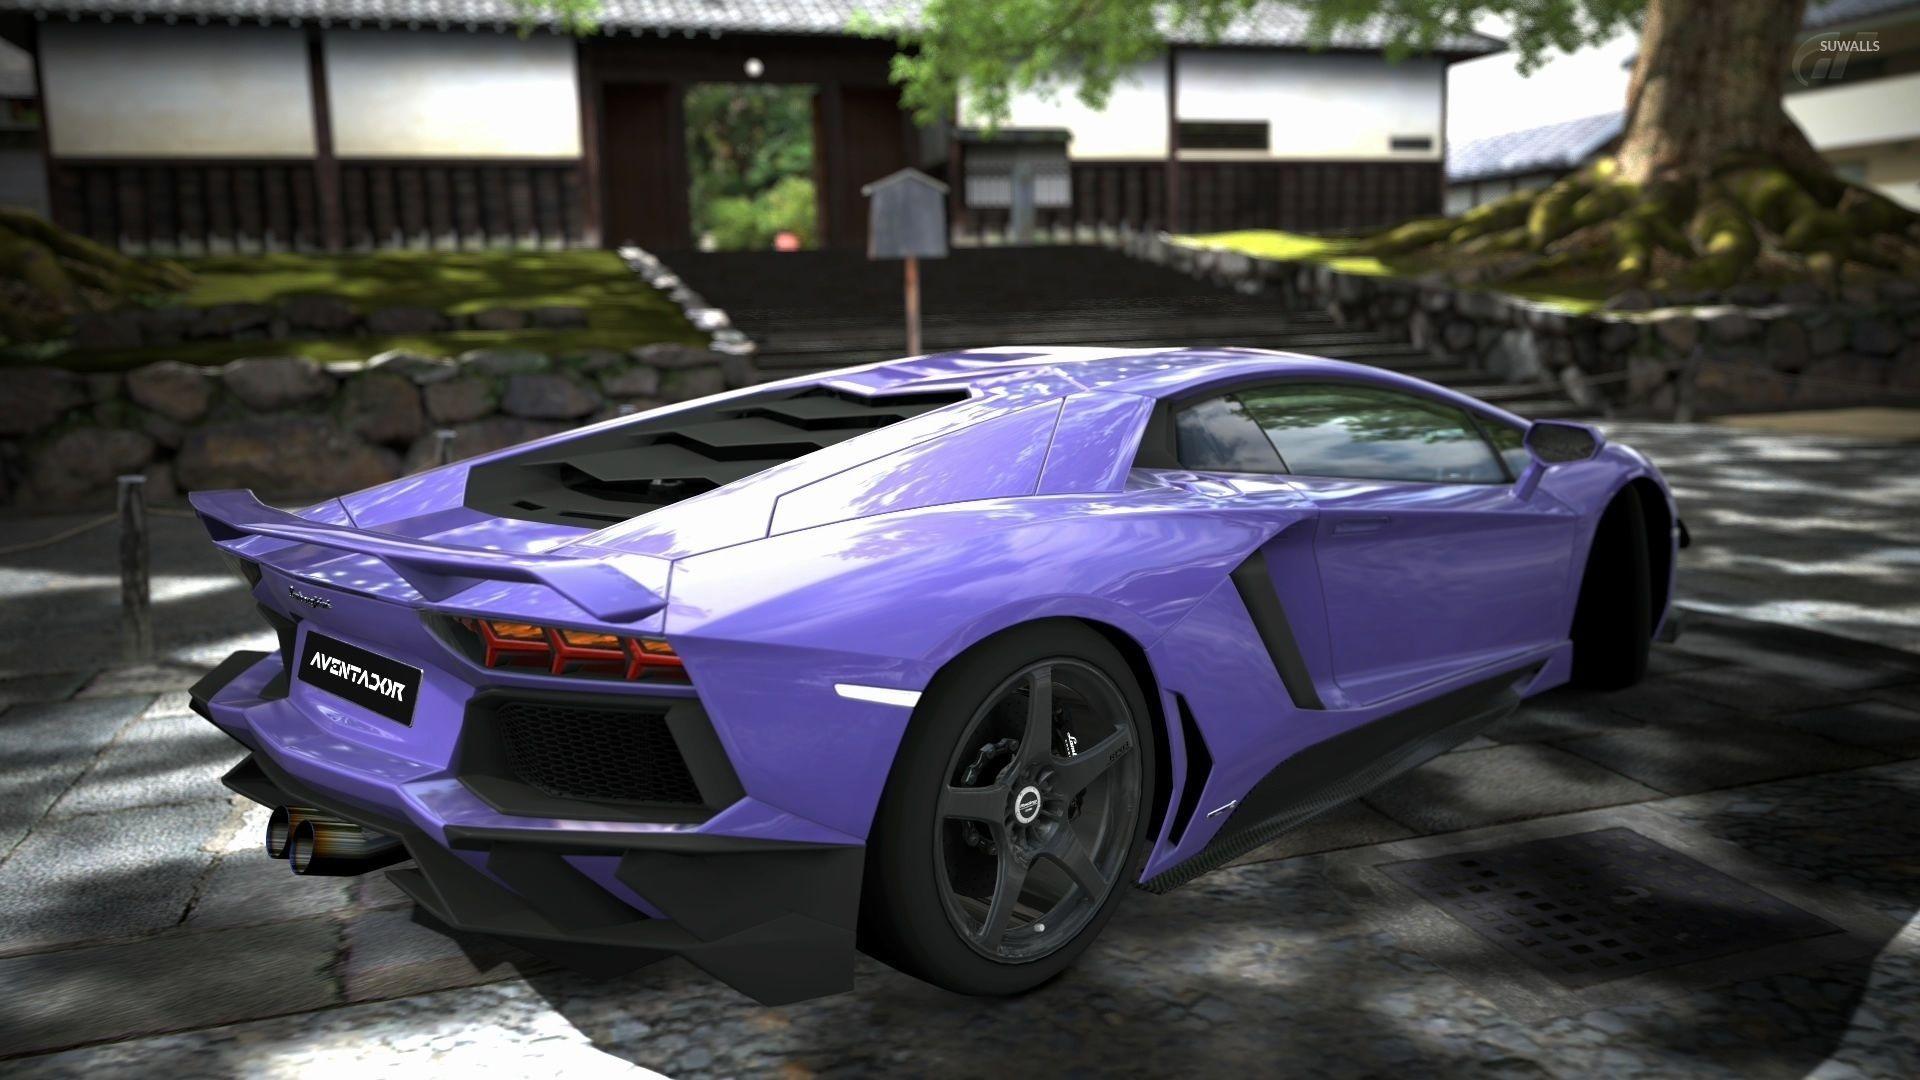 Purple Lamborghini Wallpapers - Top Free Purple ...